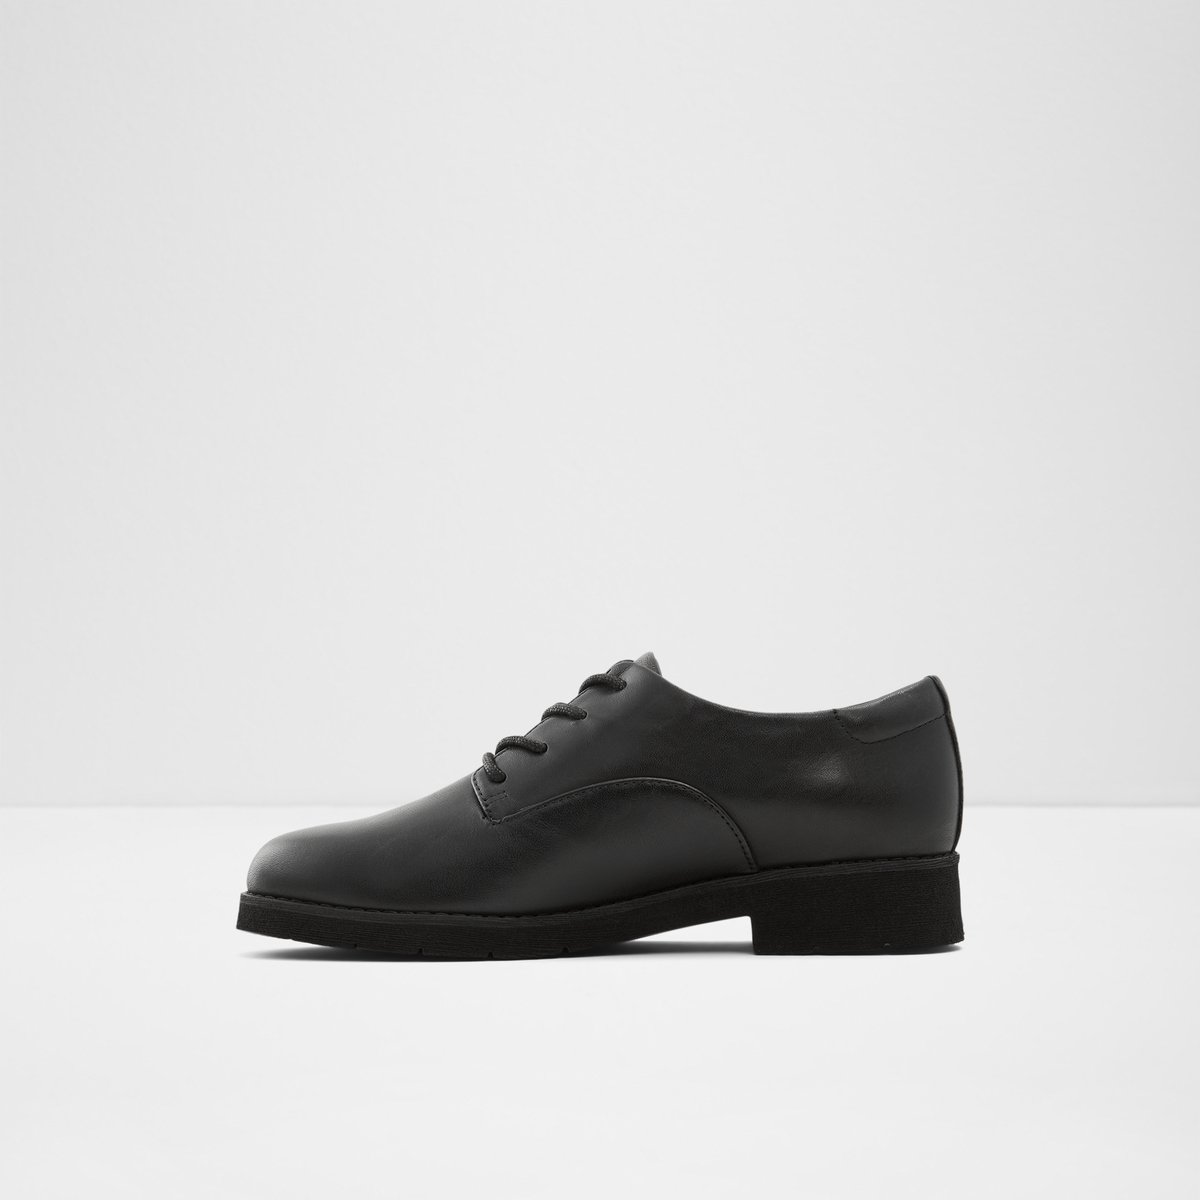 Cerquedaflex Black Leather Smooth Women's Loafers & Oxfords | ALDO Canada